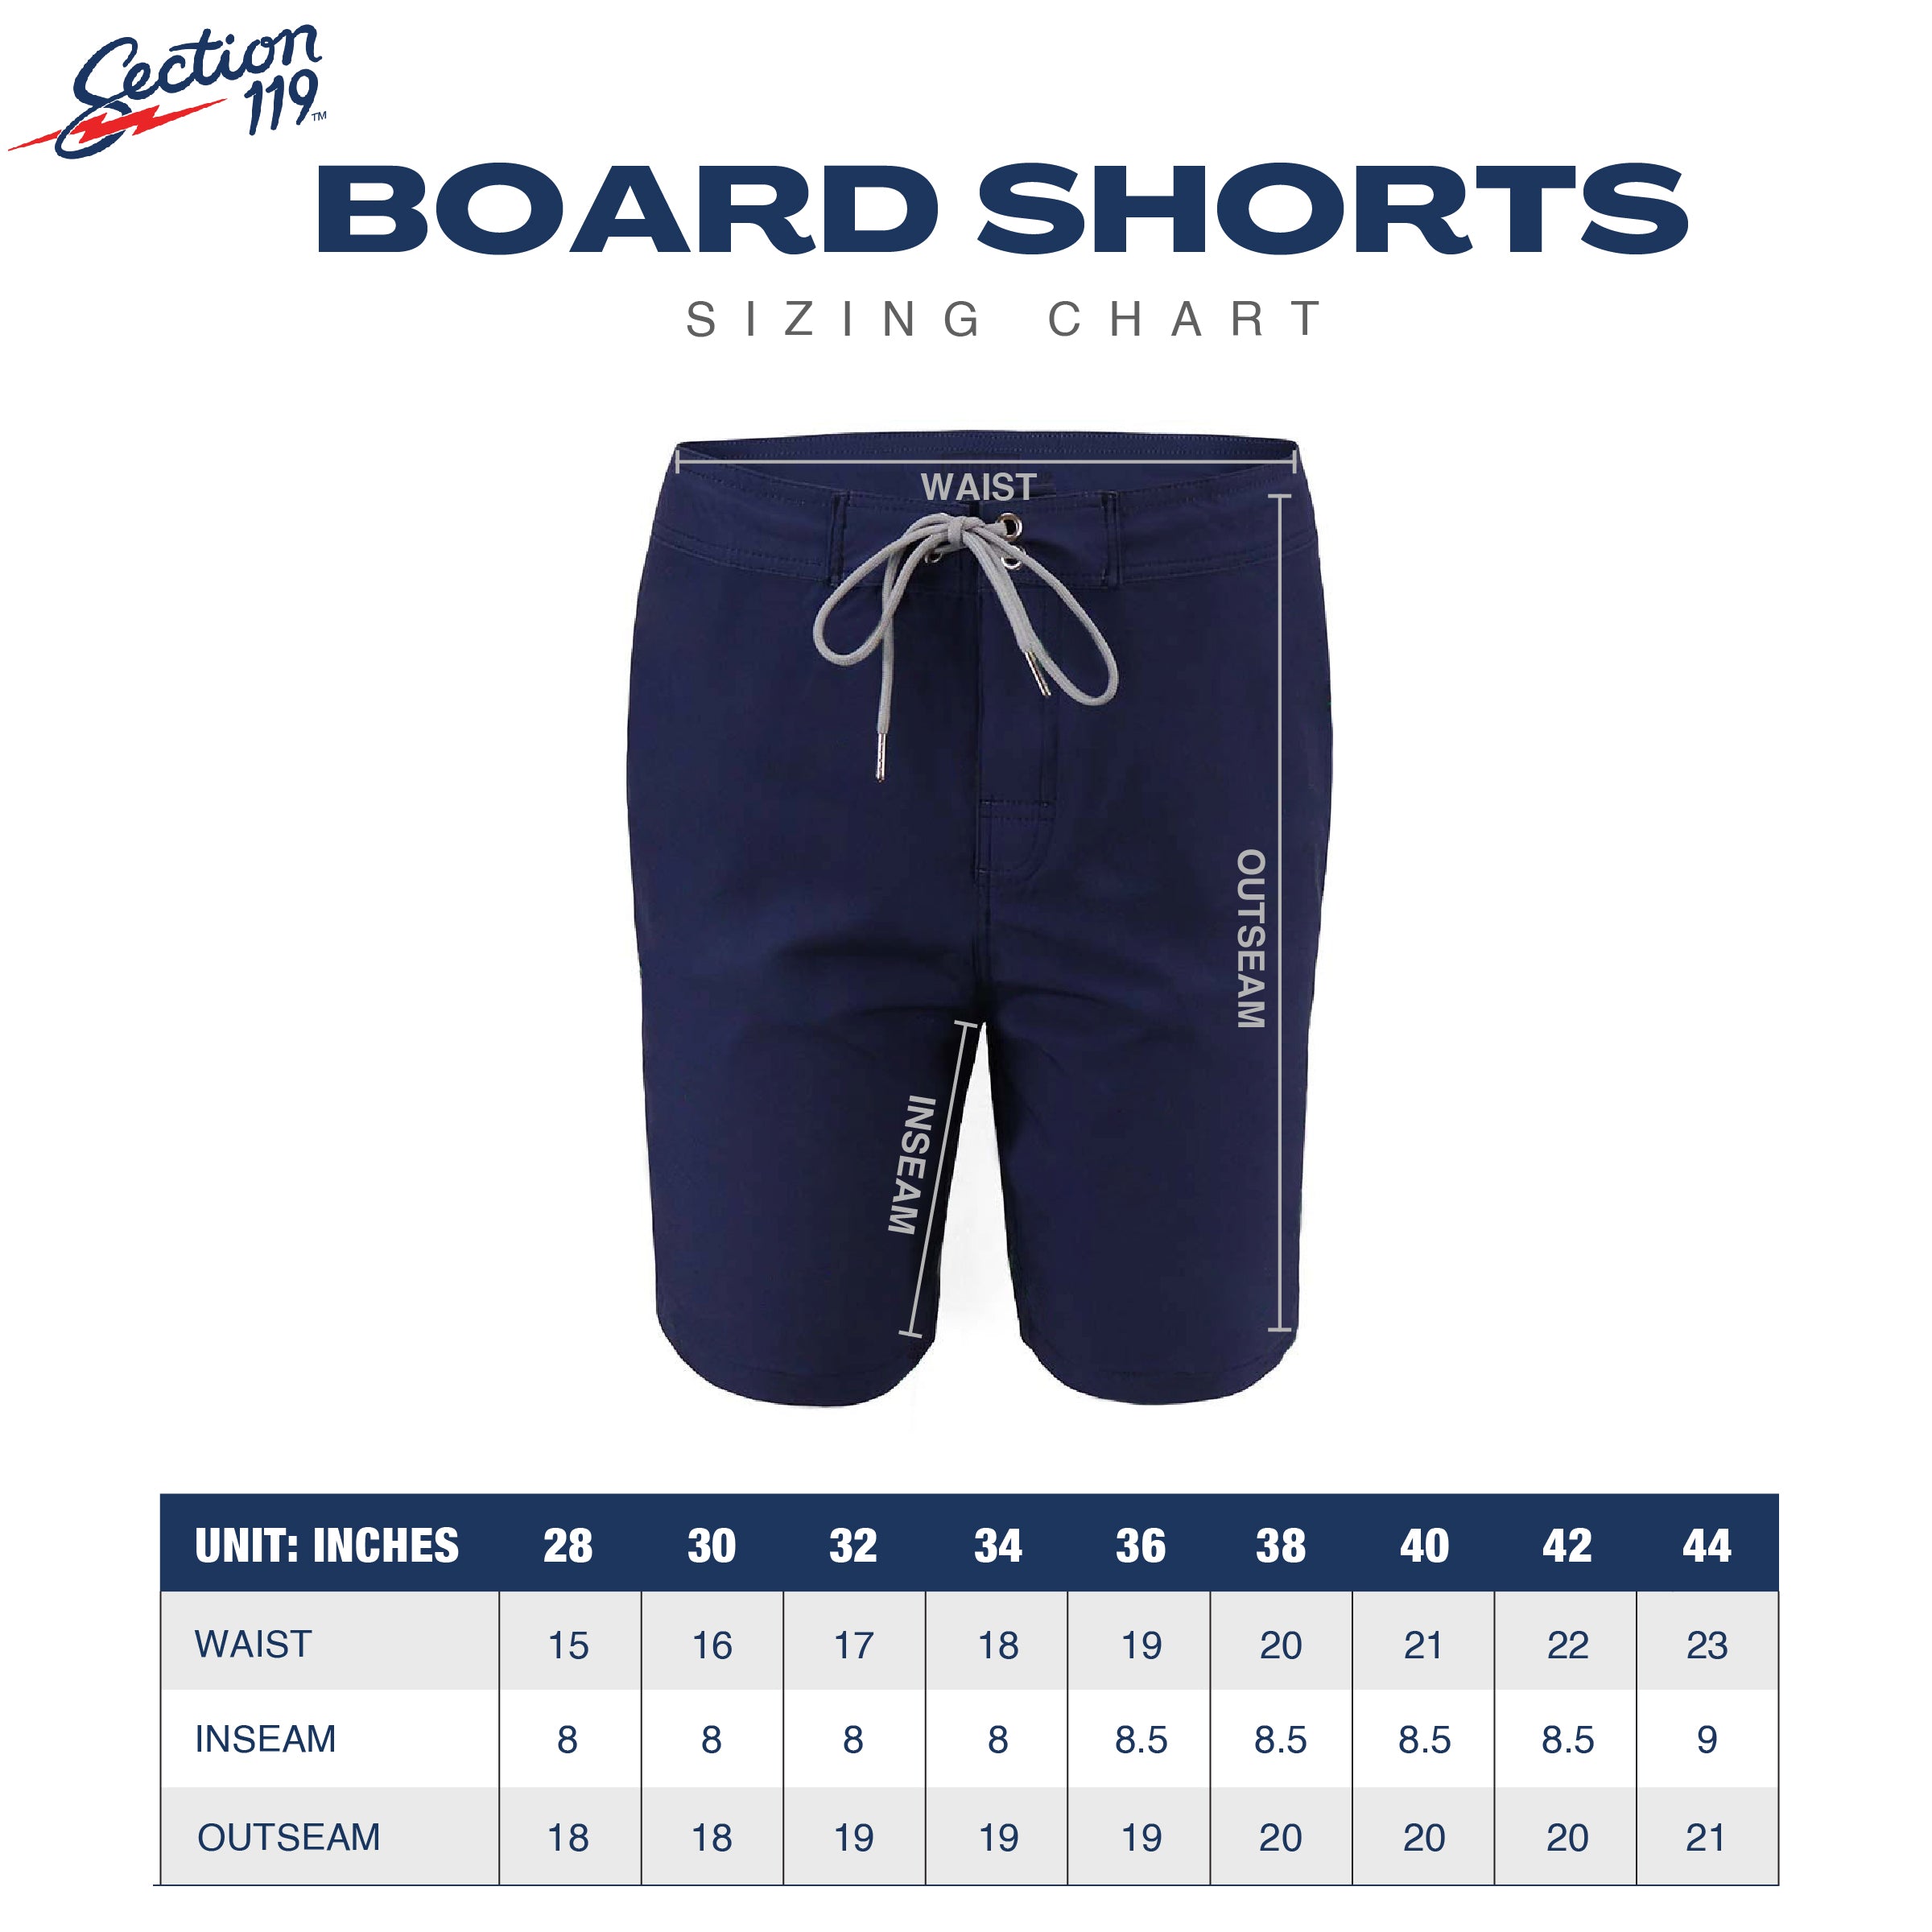 Phish Board Shorts Grey & Blue - Section 119